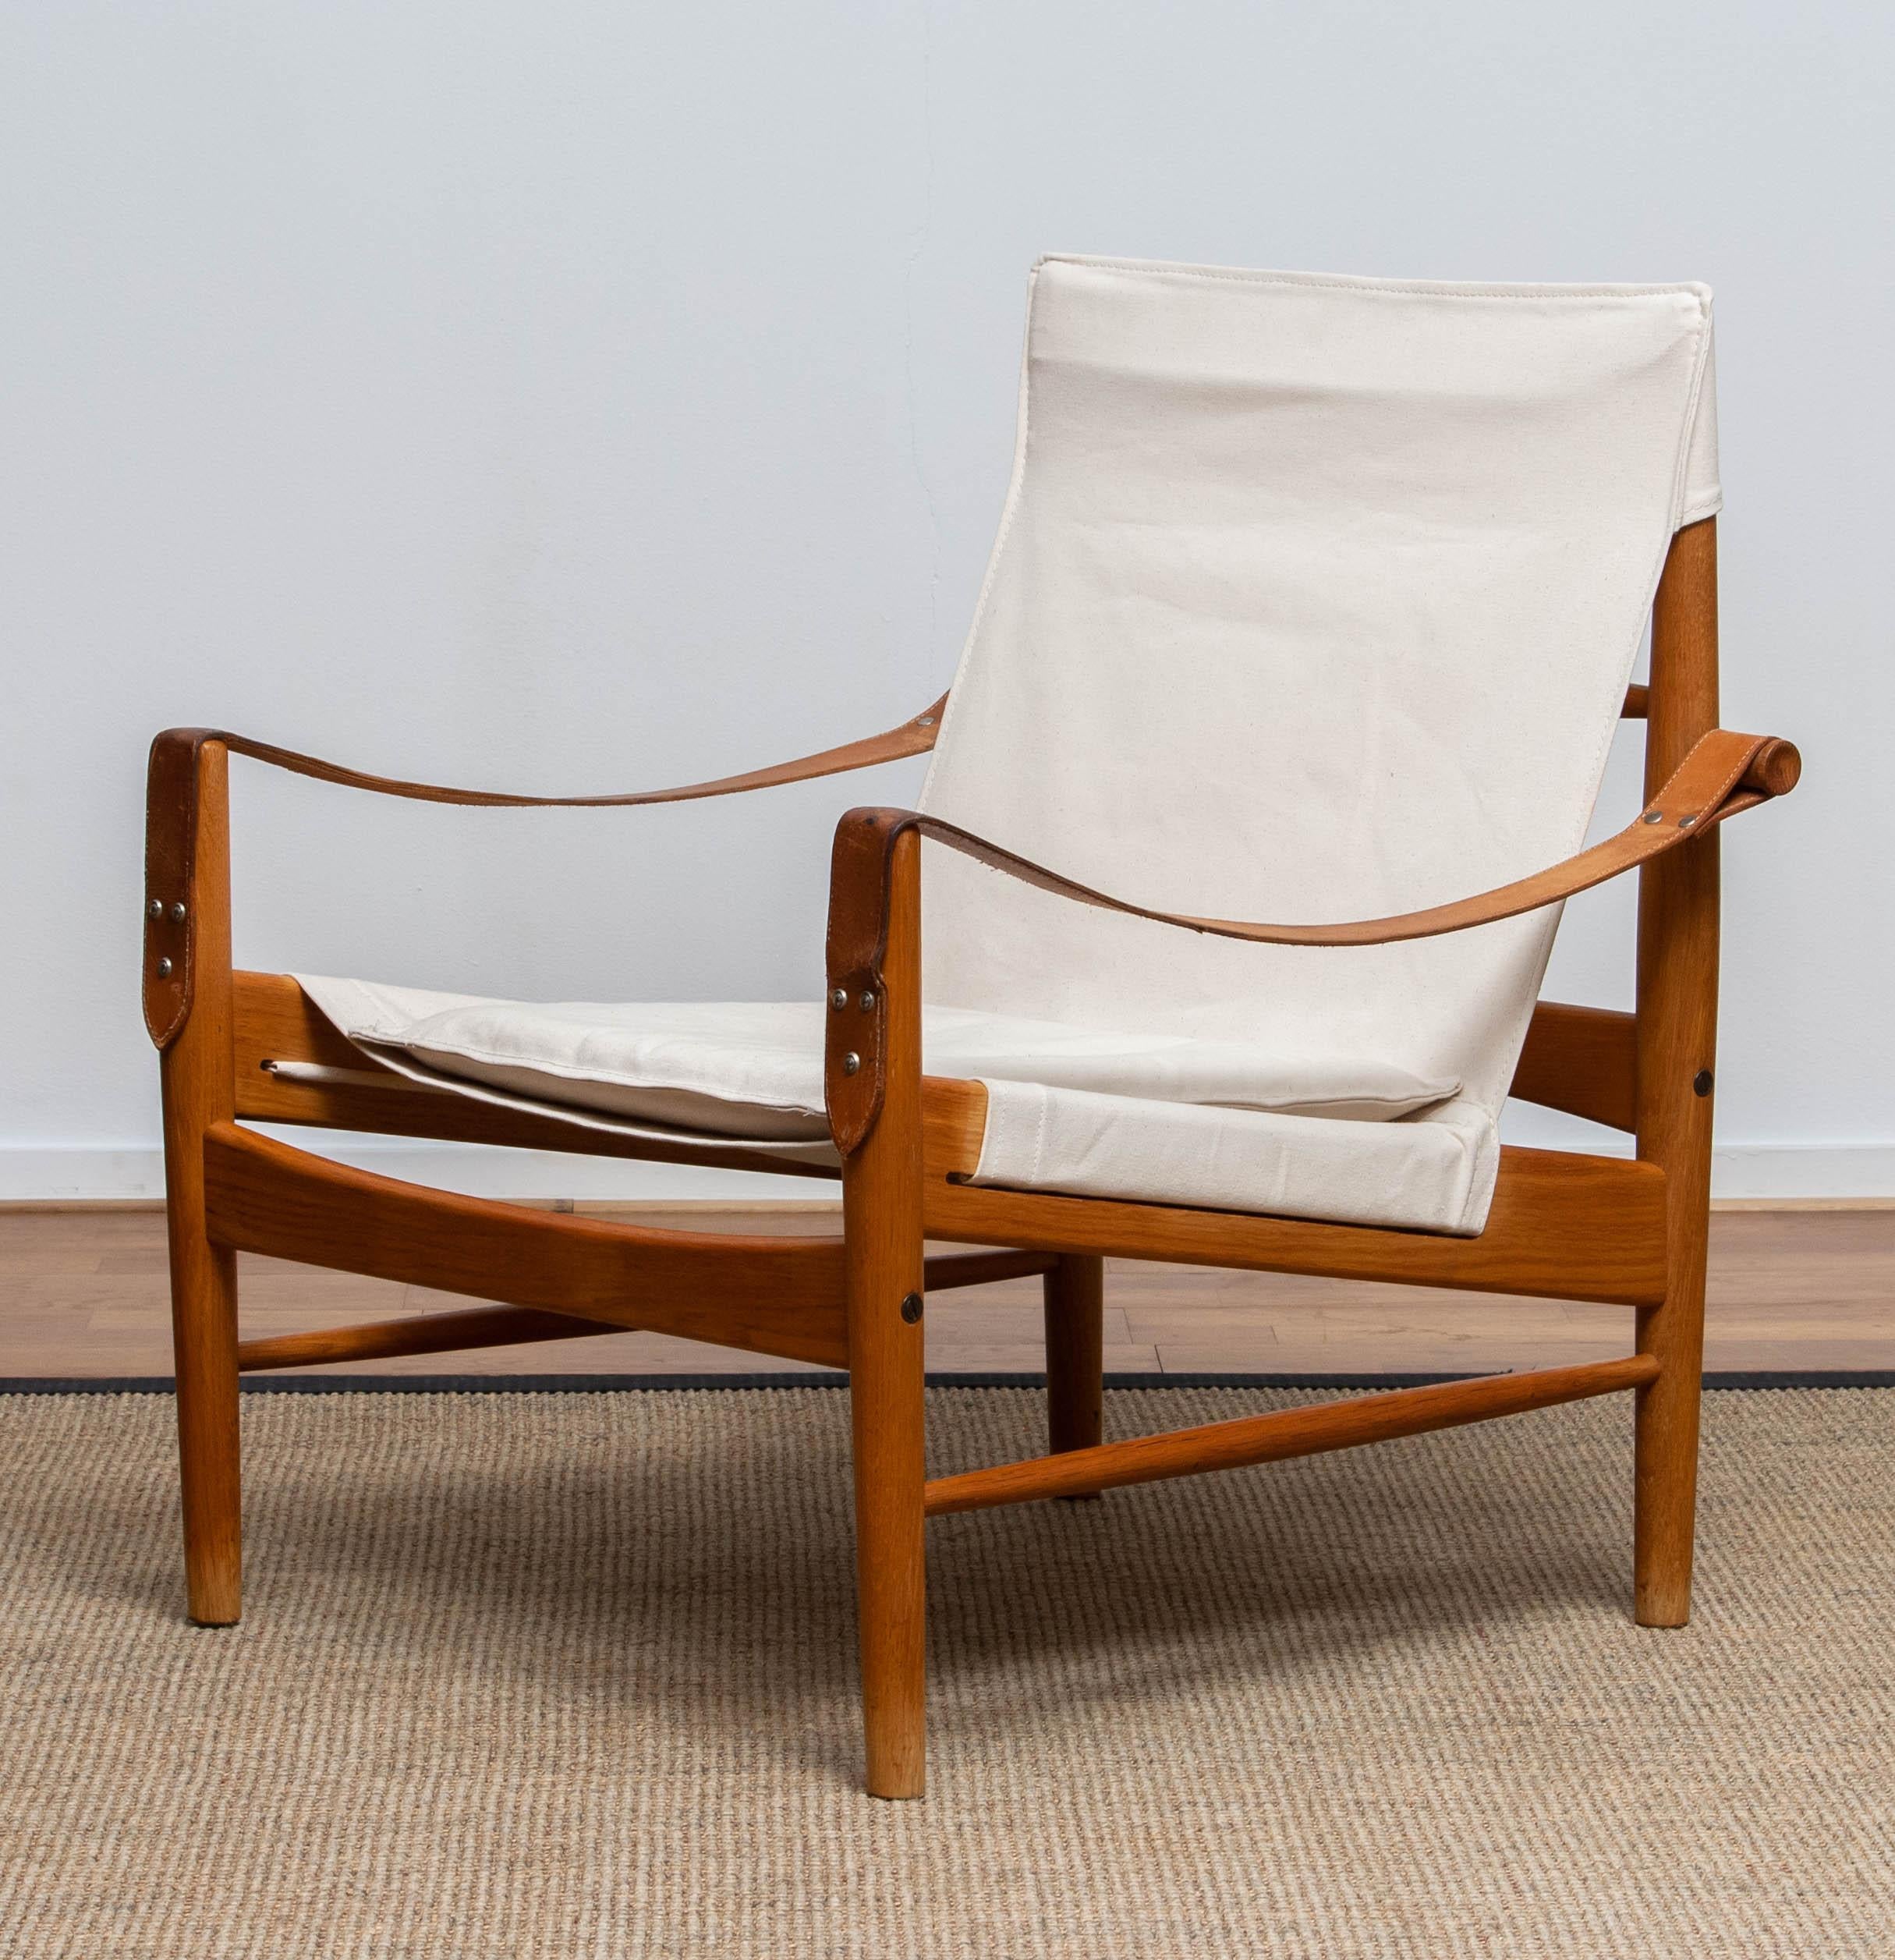 1960s, Safari Lounge Chair by Hans Olsen for Viska Möbler in Kinna, Sweden 1 2